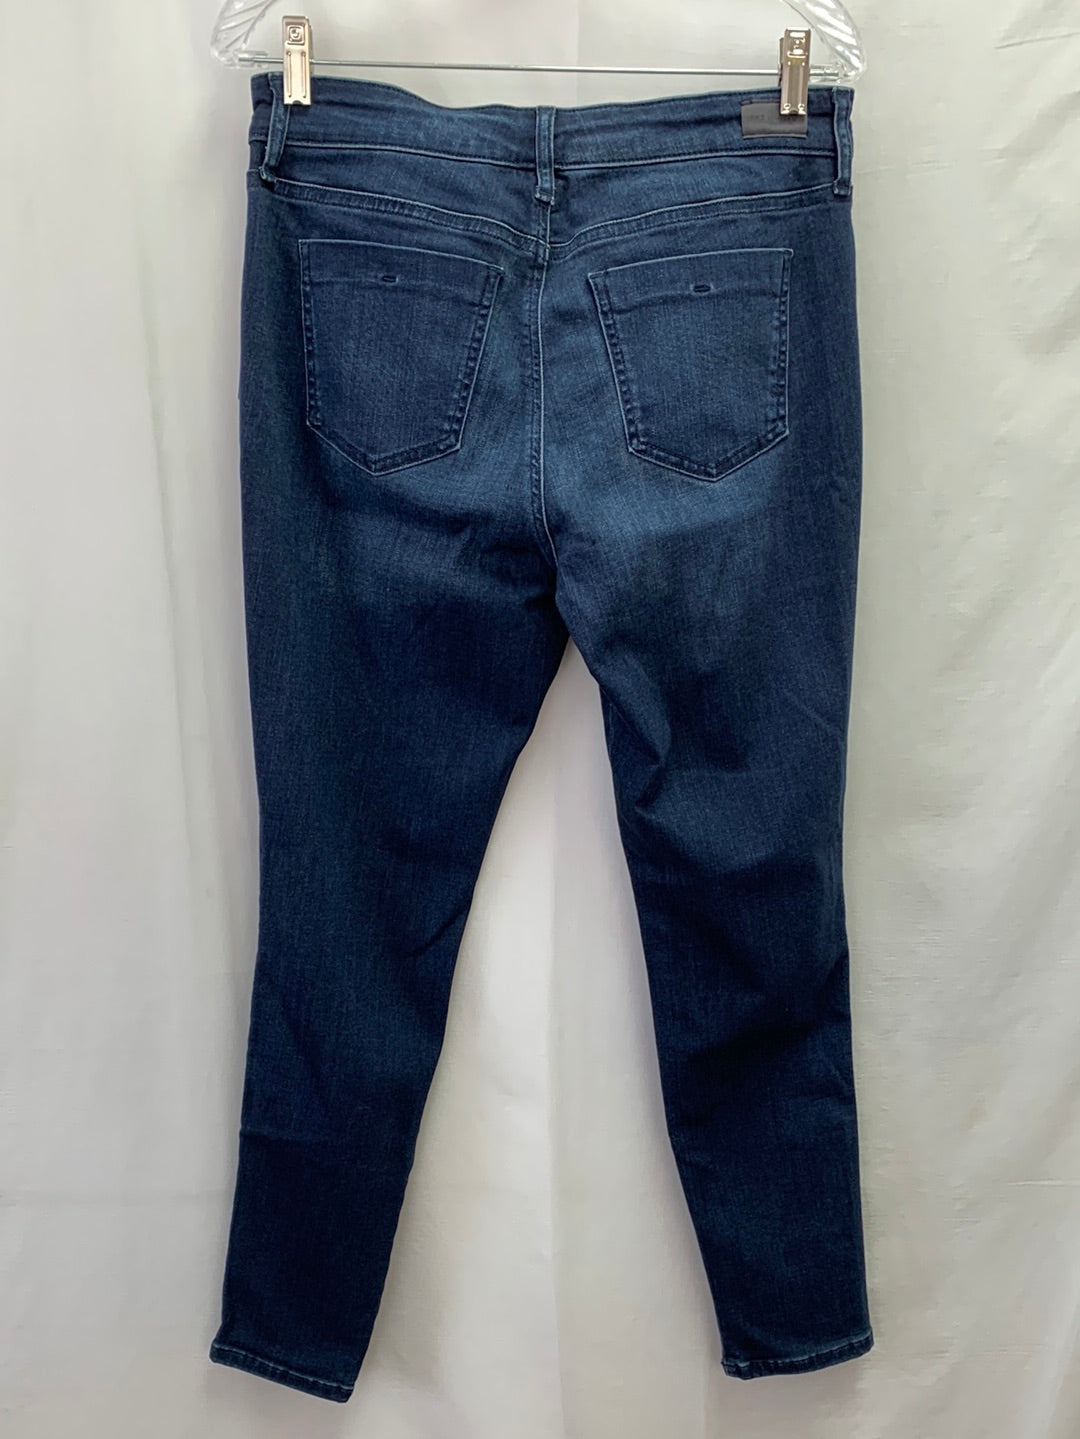 NWT - THE LIMITED dark wash Indigo Dyed Mid Rise Stretch Skinny Jeans - 12